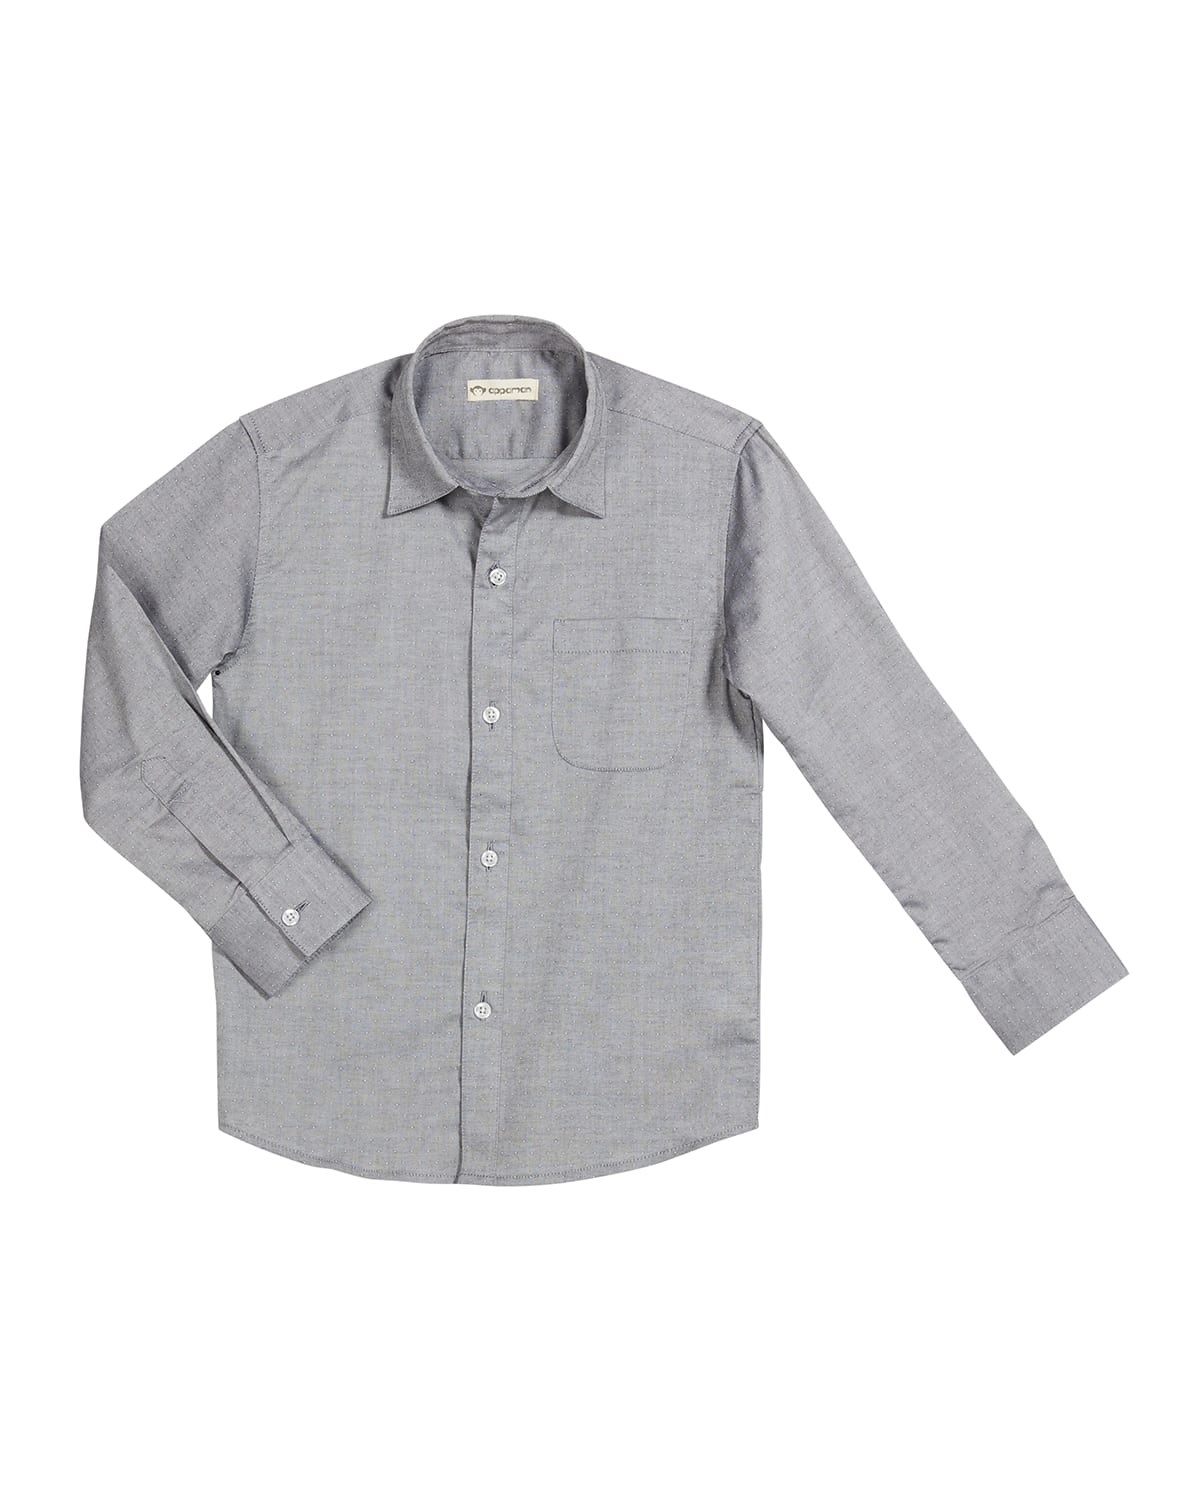 Appaman The Standard Poplin Shirt In Gray